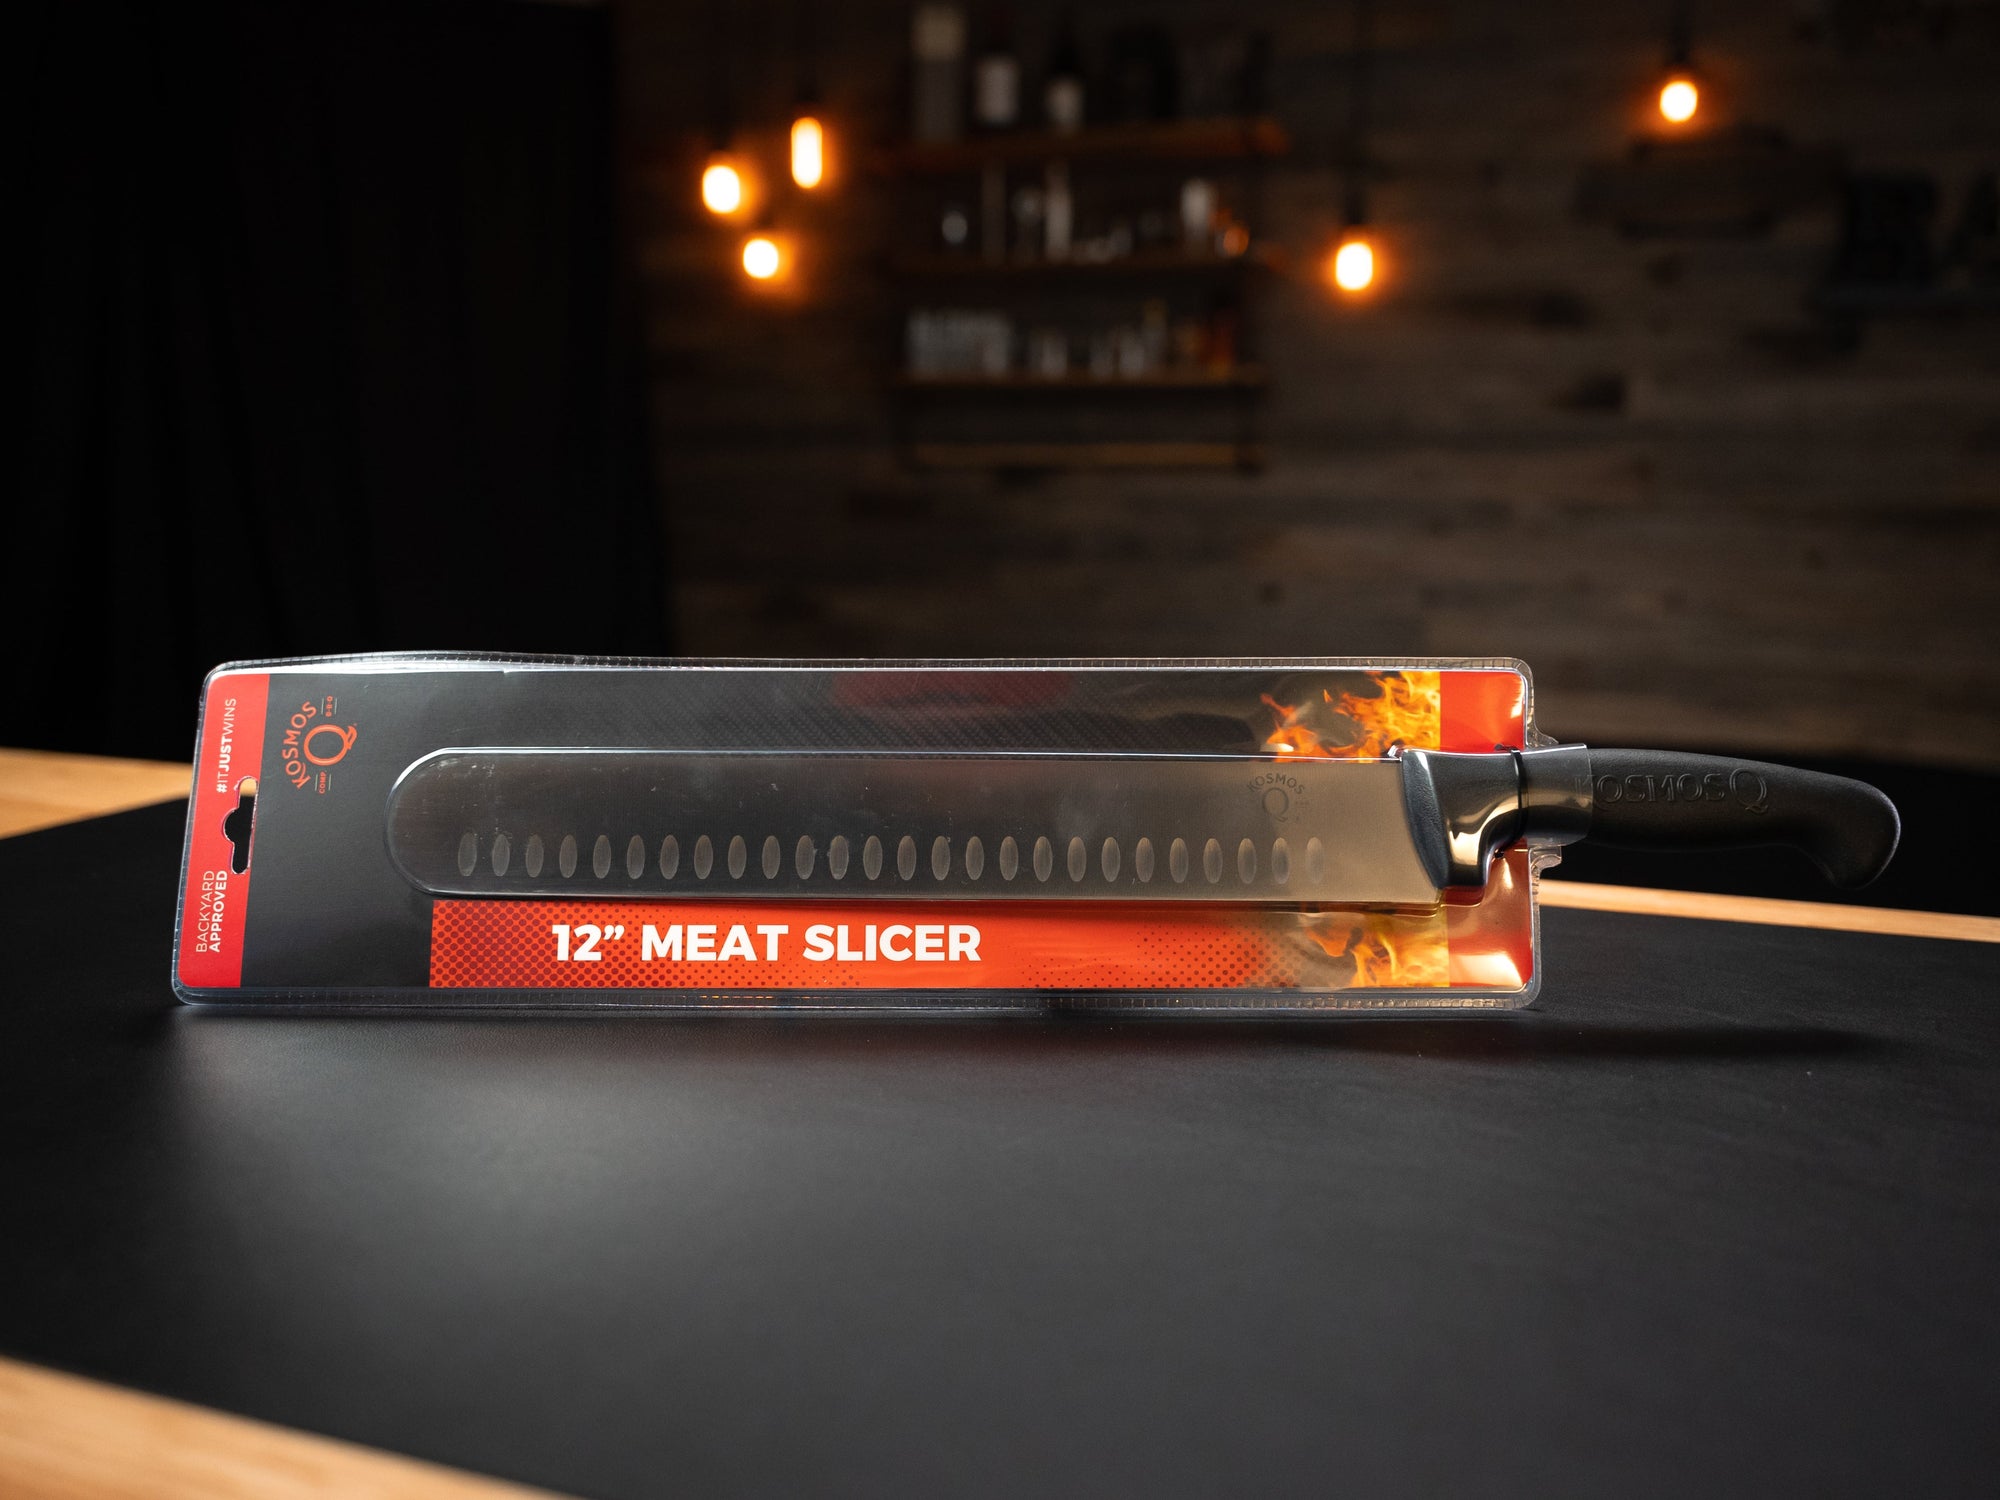 Kosmos Q BBQ Products & Supplies Kosmos Q 12-inch Meat Slicer